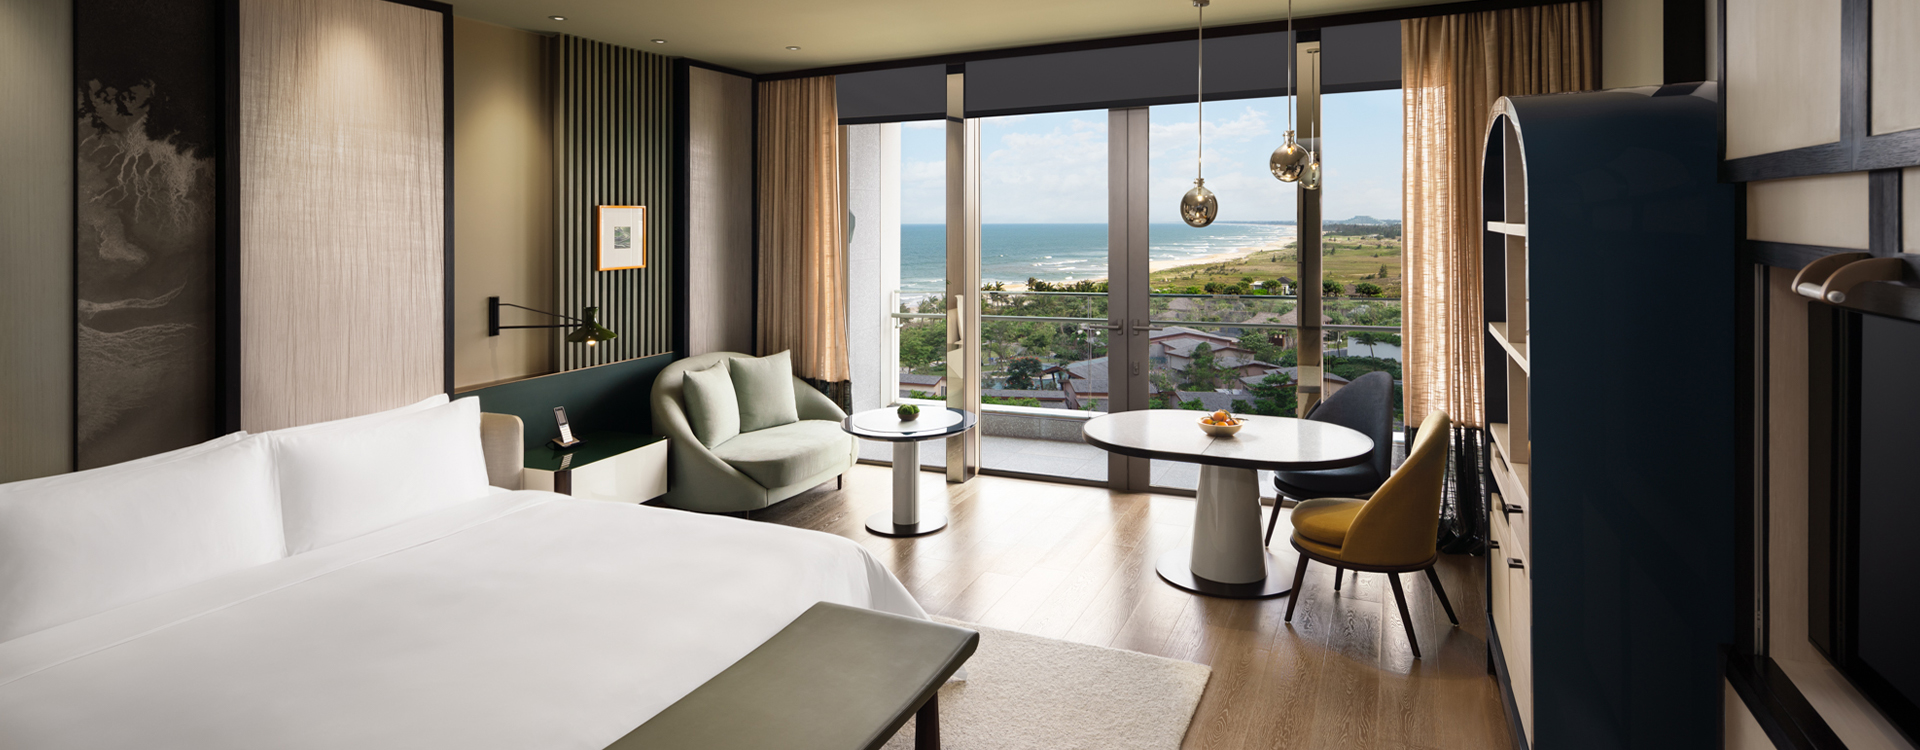 New World Hoiana Beach Resort Rooms & Suites